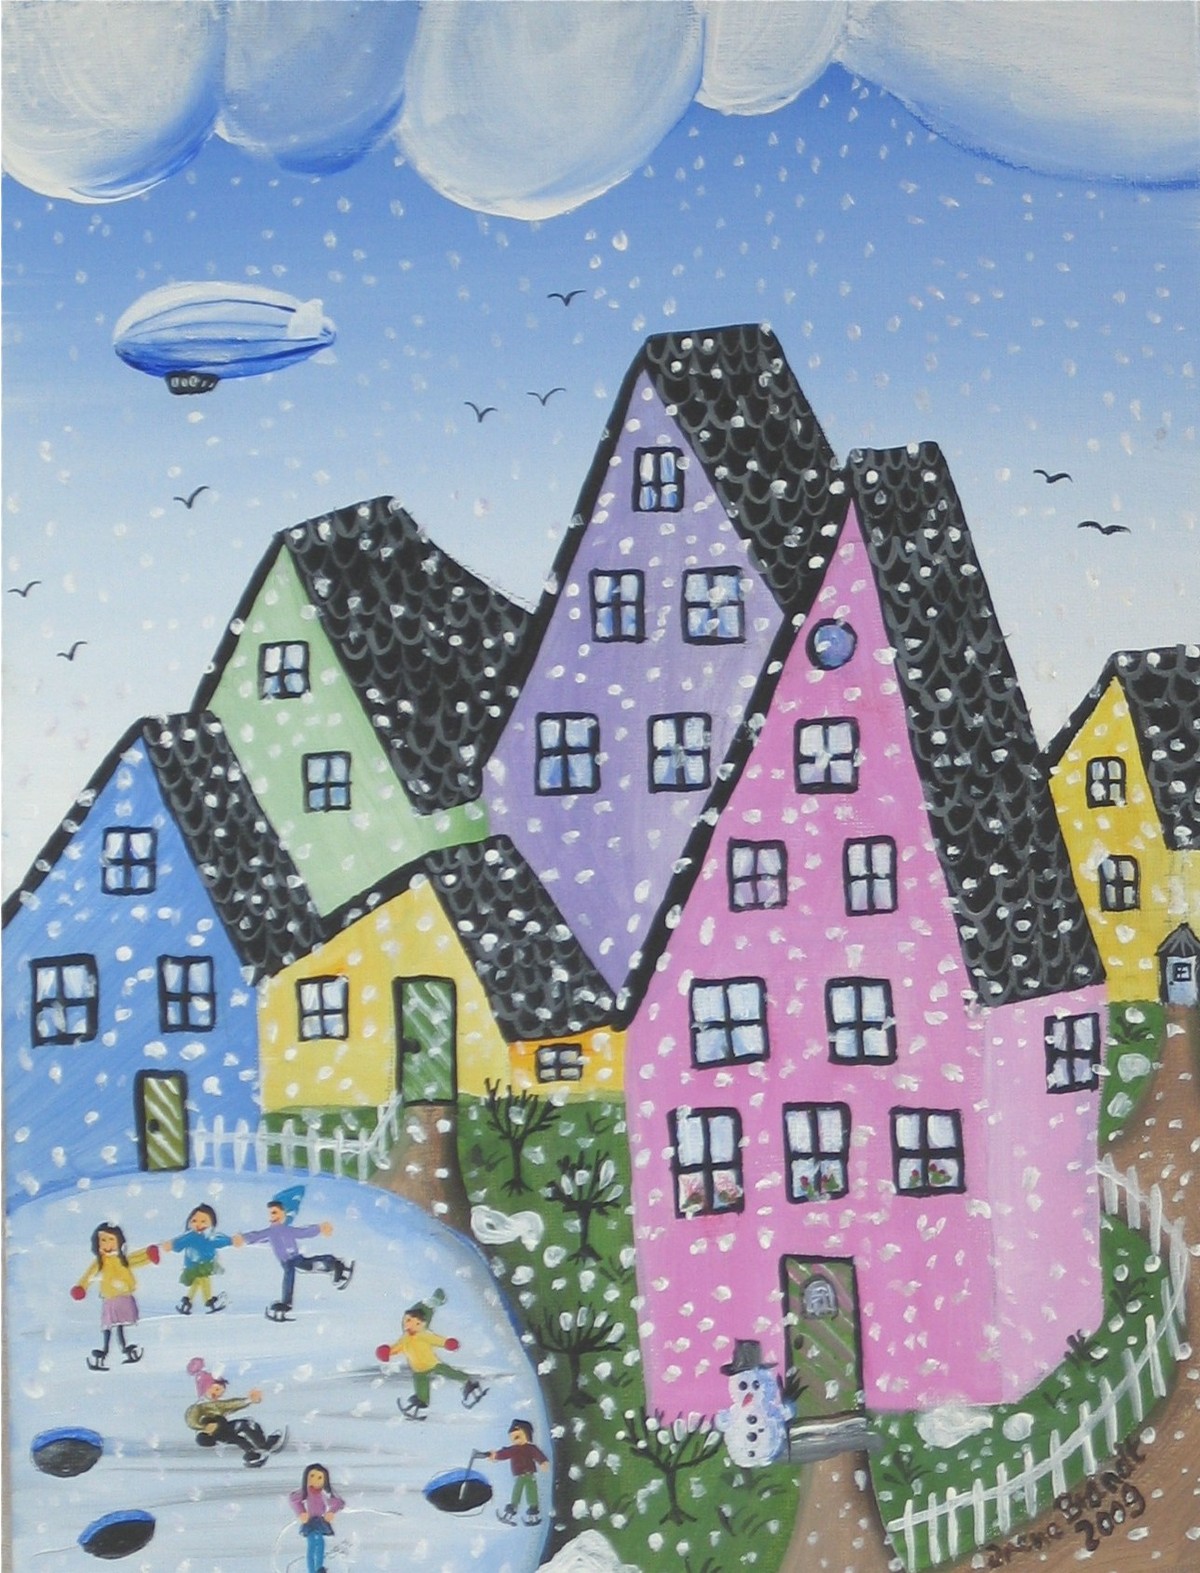 snow falls, children colourful houses snowman